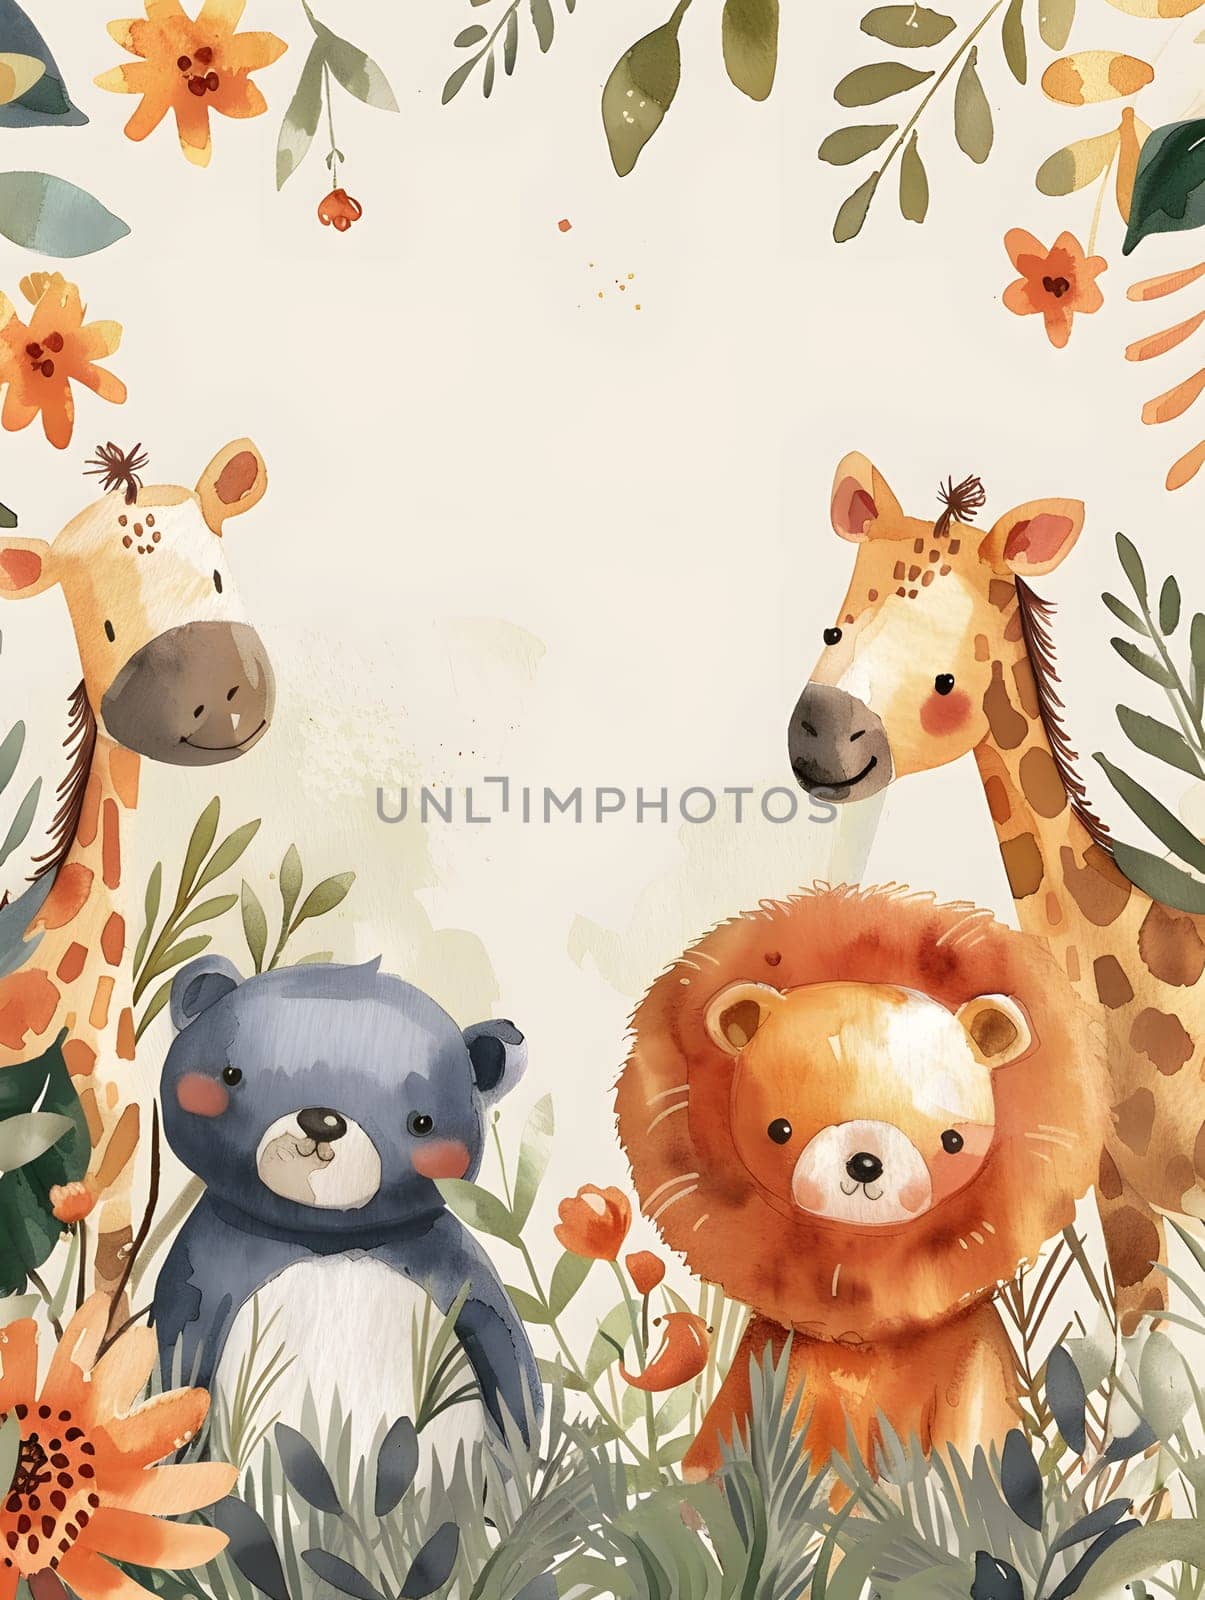 A giraffe, a lion, a bear, and a teddy bear in a flowerfilled field by Nadtochiy